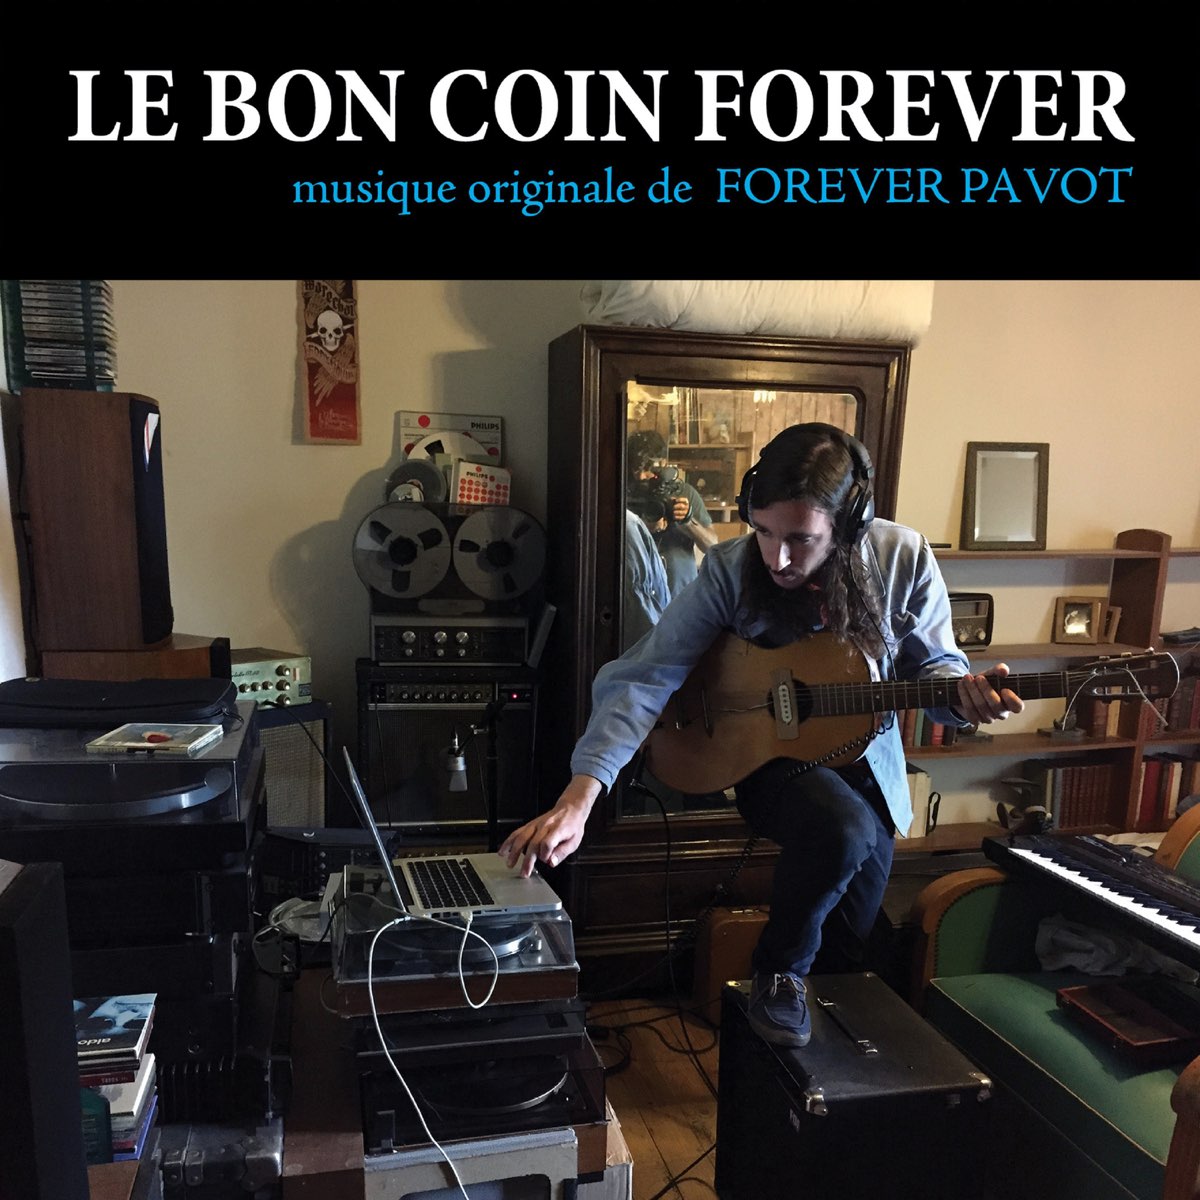 Le bon coin Forever - Album by Forever Pavot - Apple Music